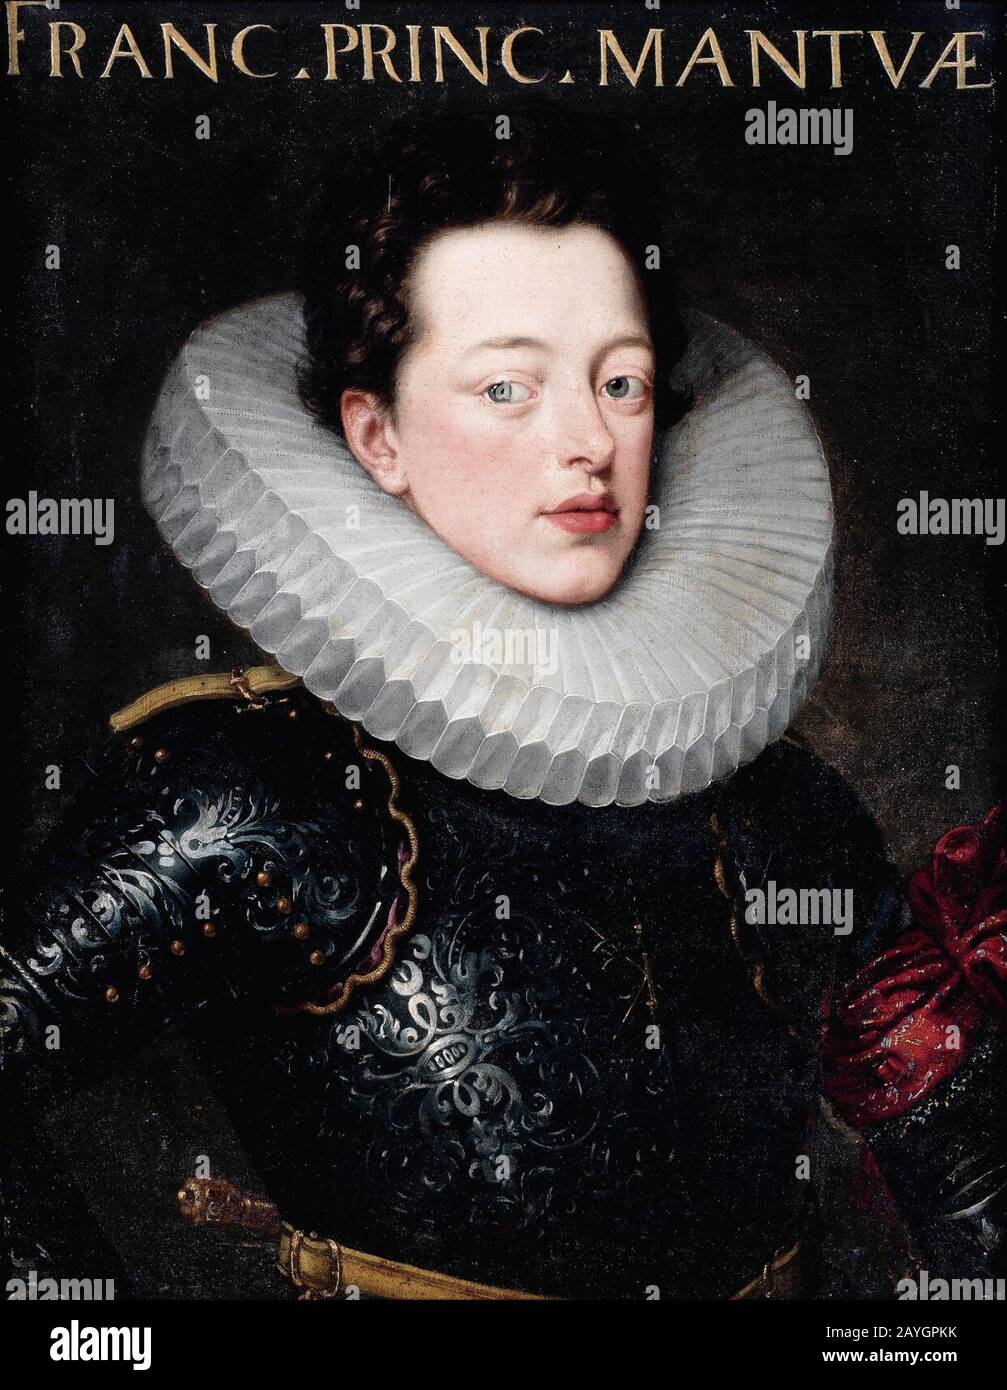 Francesco Gonzaga, Duke of Mantua, by workshop of Frans Pourbus the Younger. Stock Photo